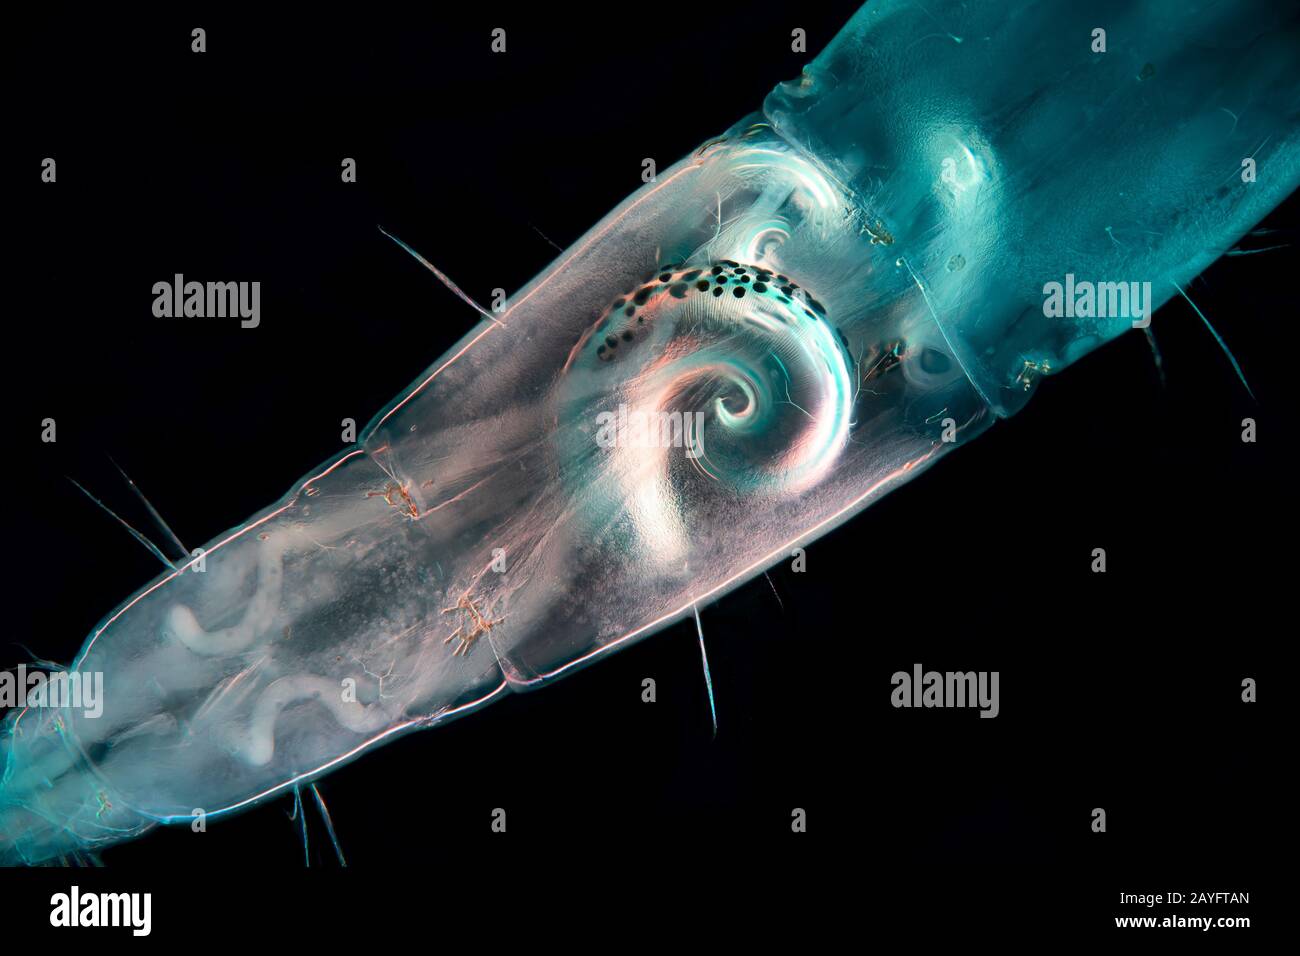 Midge fantasma (espec. De Chaoborus), foto del microscopio del abdomen de un midge fantasma, Alemania Foto de stock